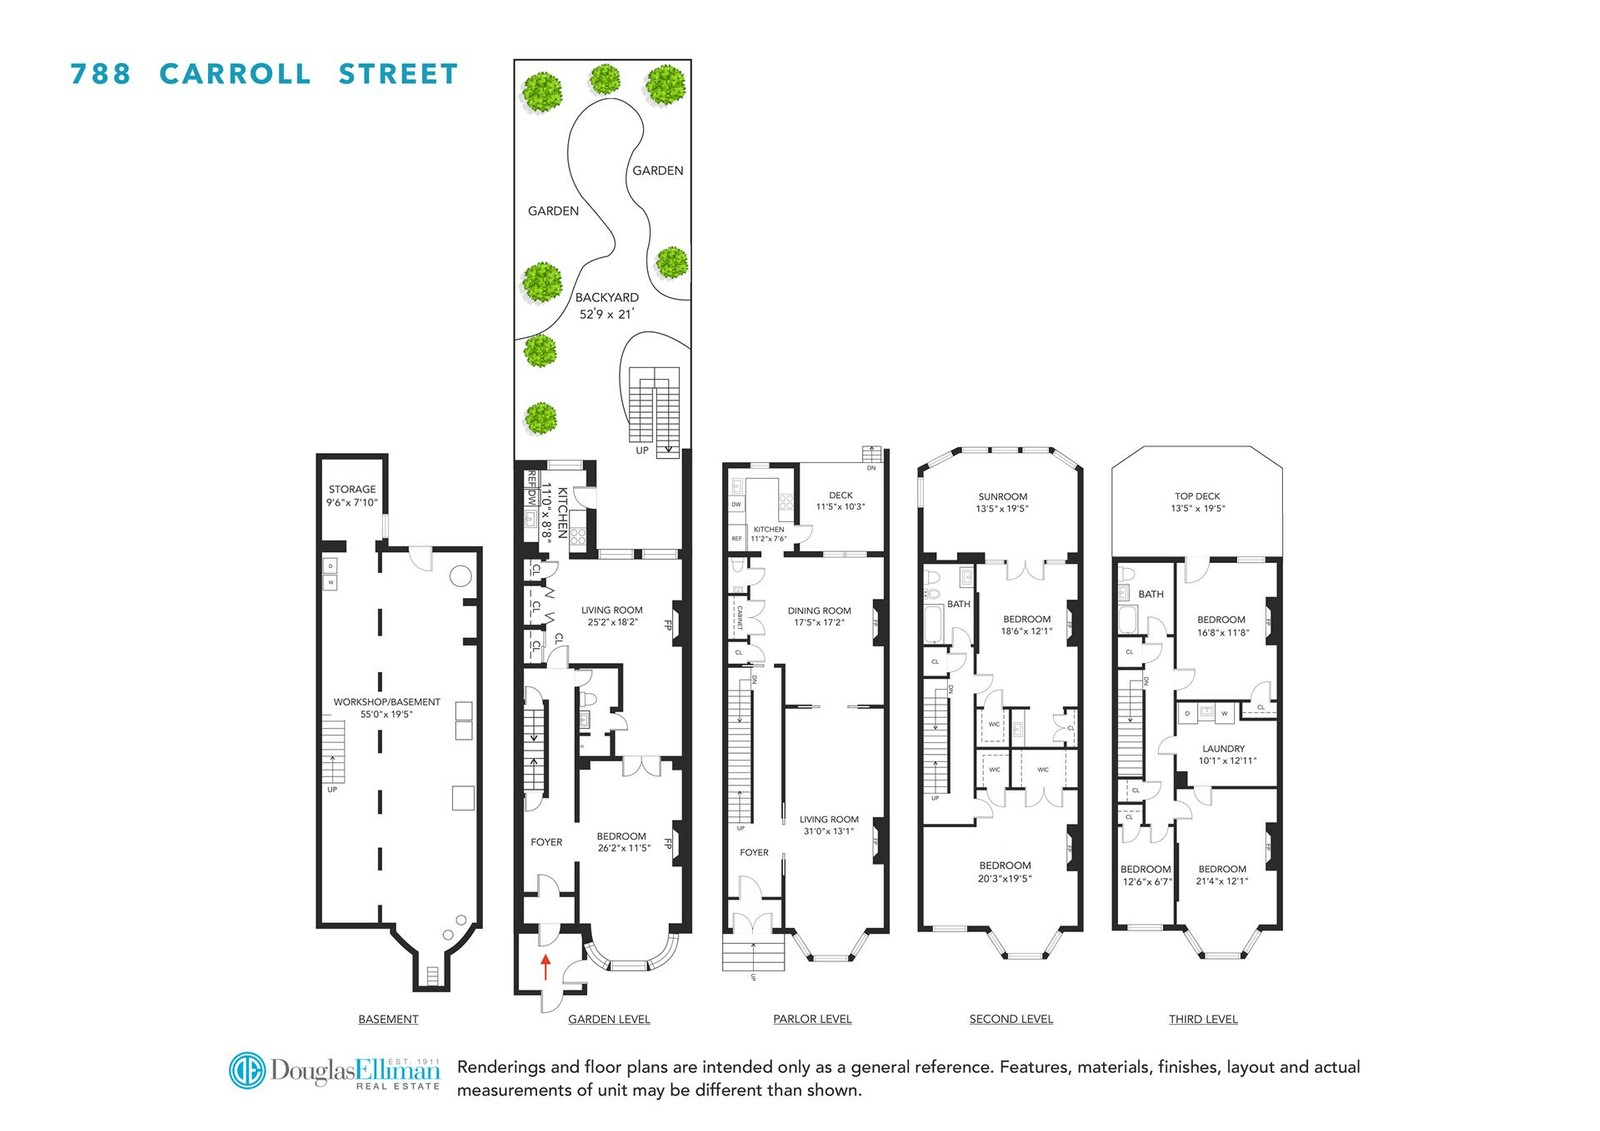 floorplan of 788 carroll street